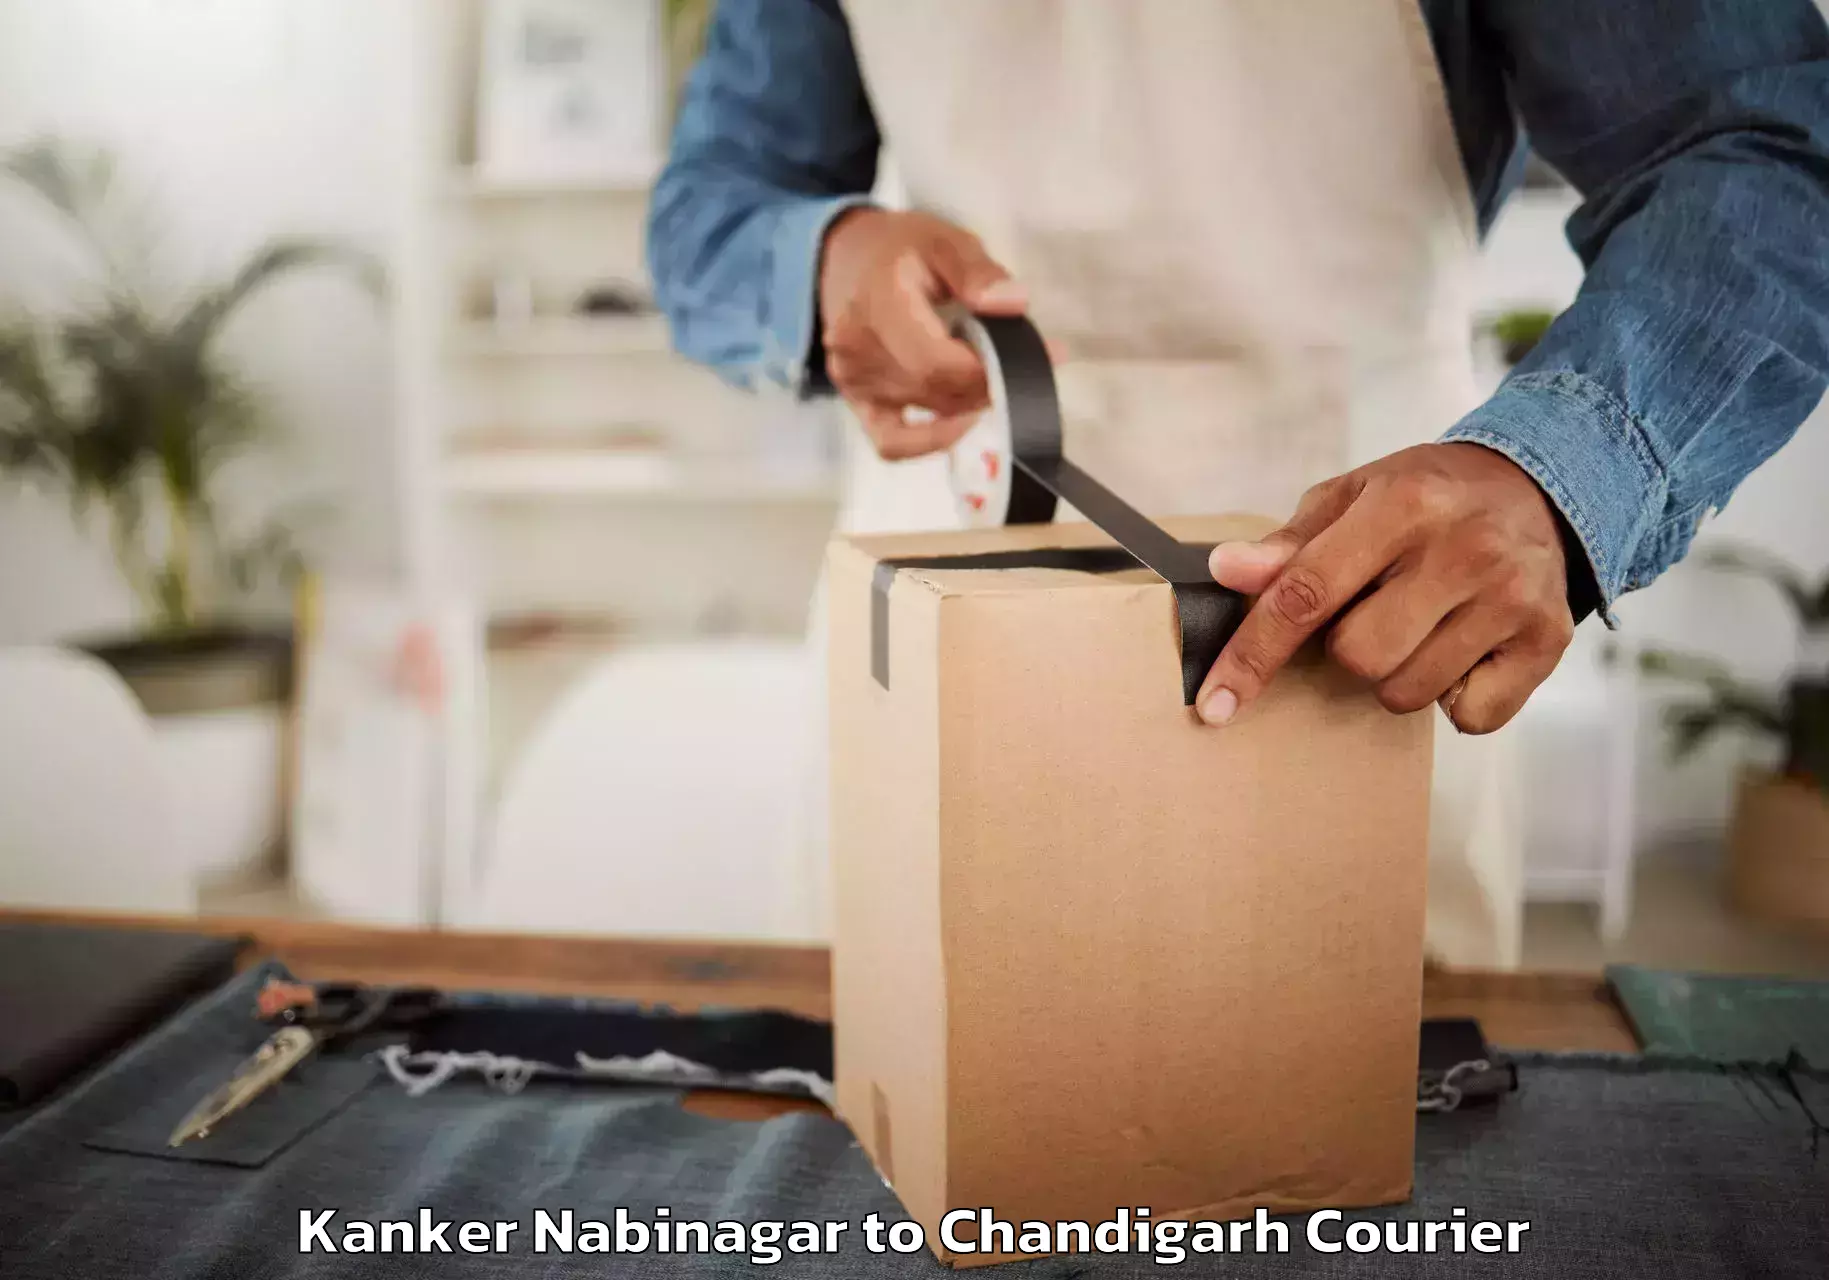 Household goods transport service Kanker Nabinagar to Chandigarh